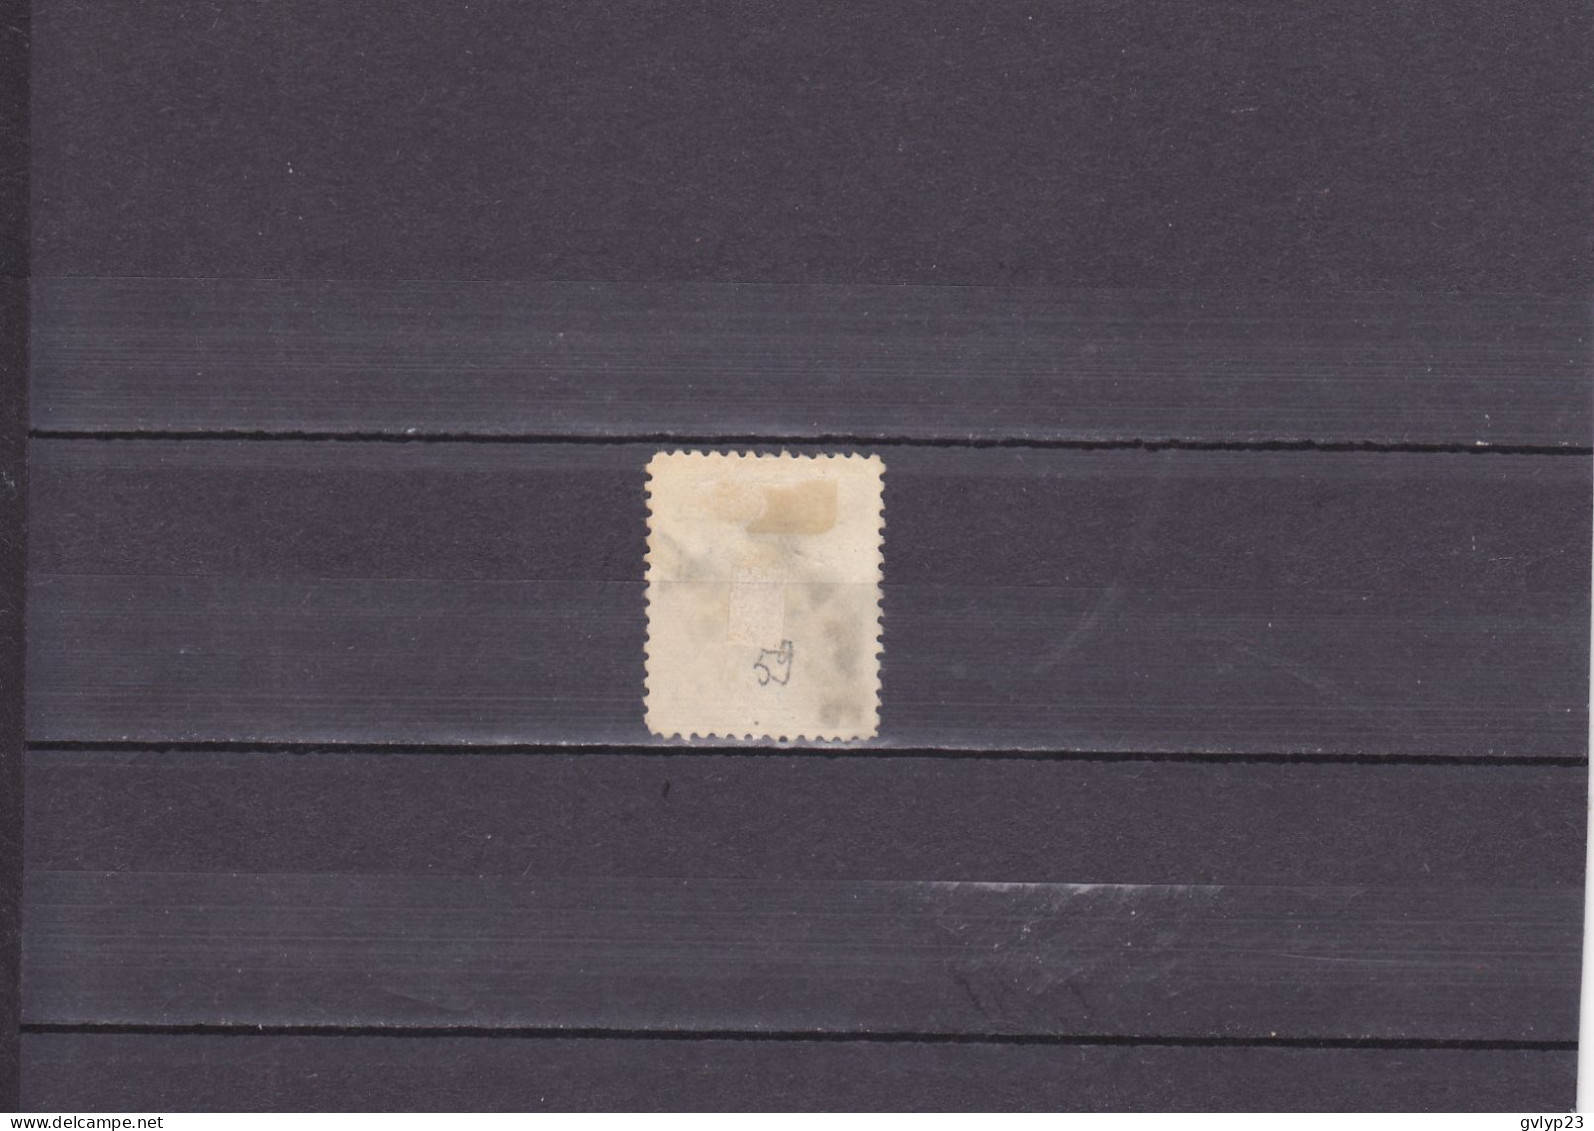 KOOKABURRA / OBLITERE / N° 59 YVERT ET TELLIER 1928 - Used Stamps